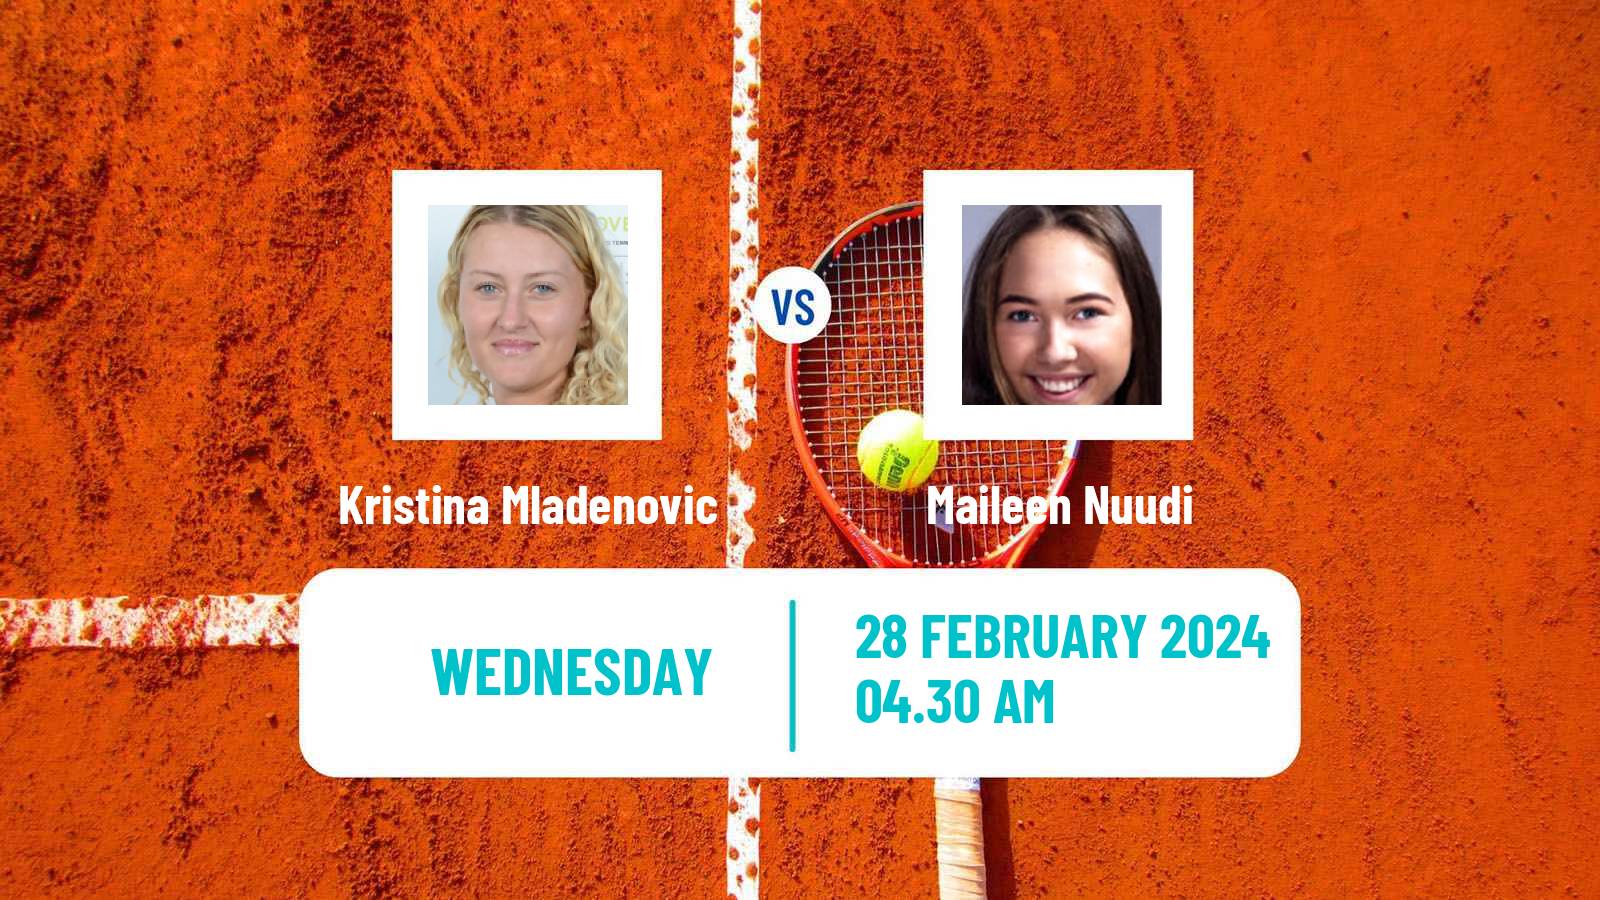 Tennis ITF W35 Helsinki Women Kristina Mladenovic - Maileen Nuudi